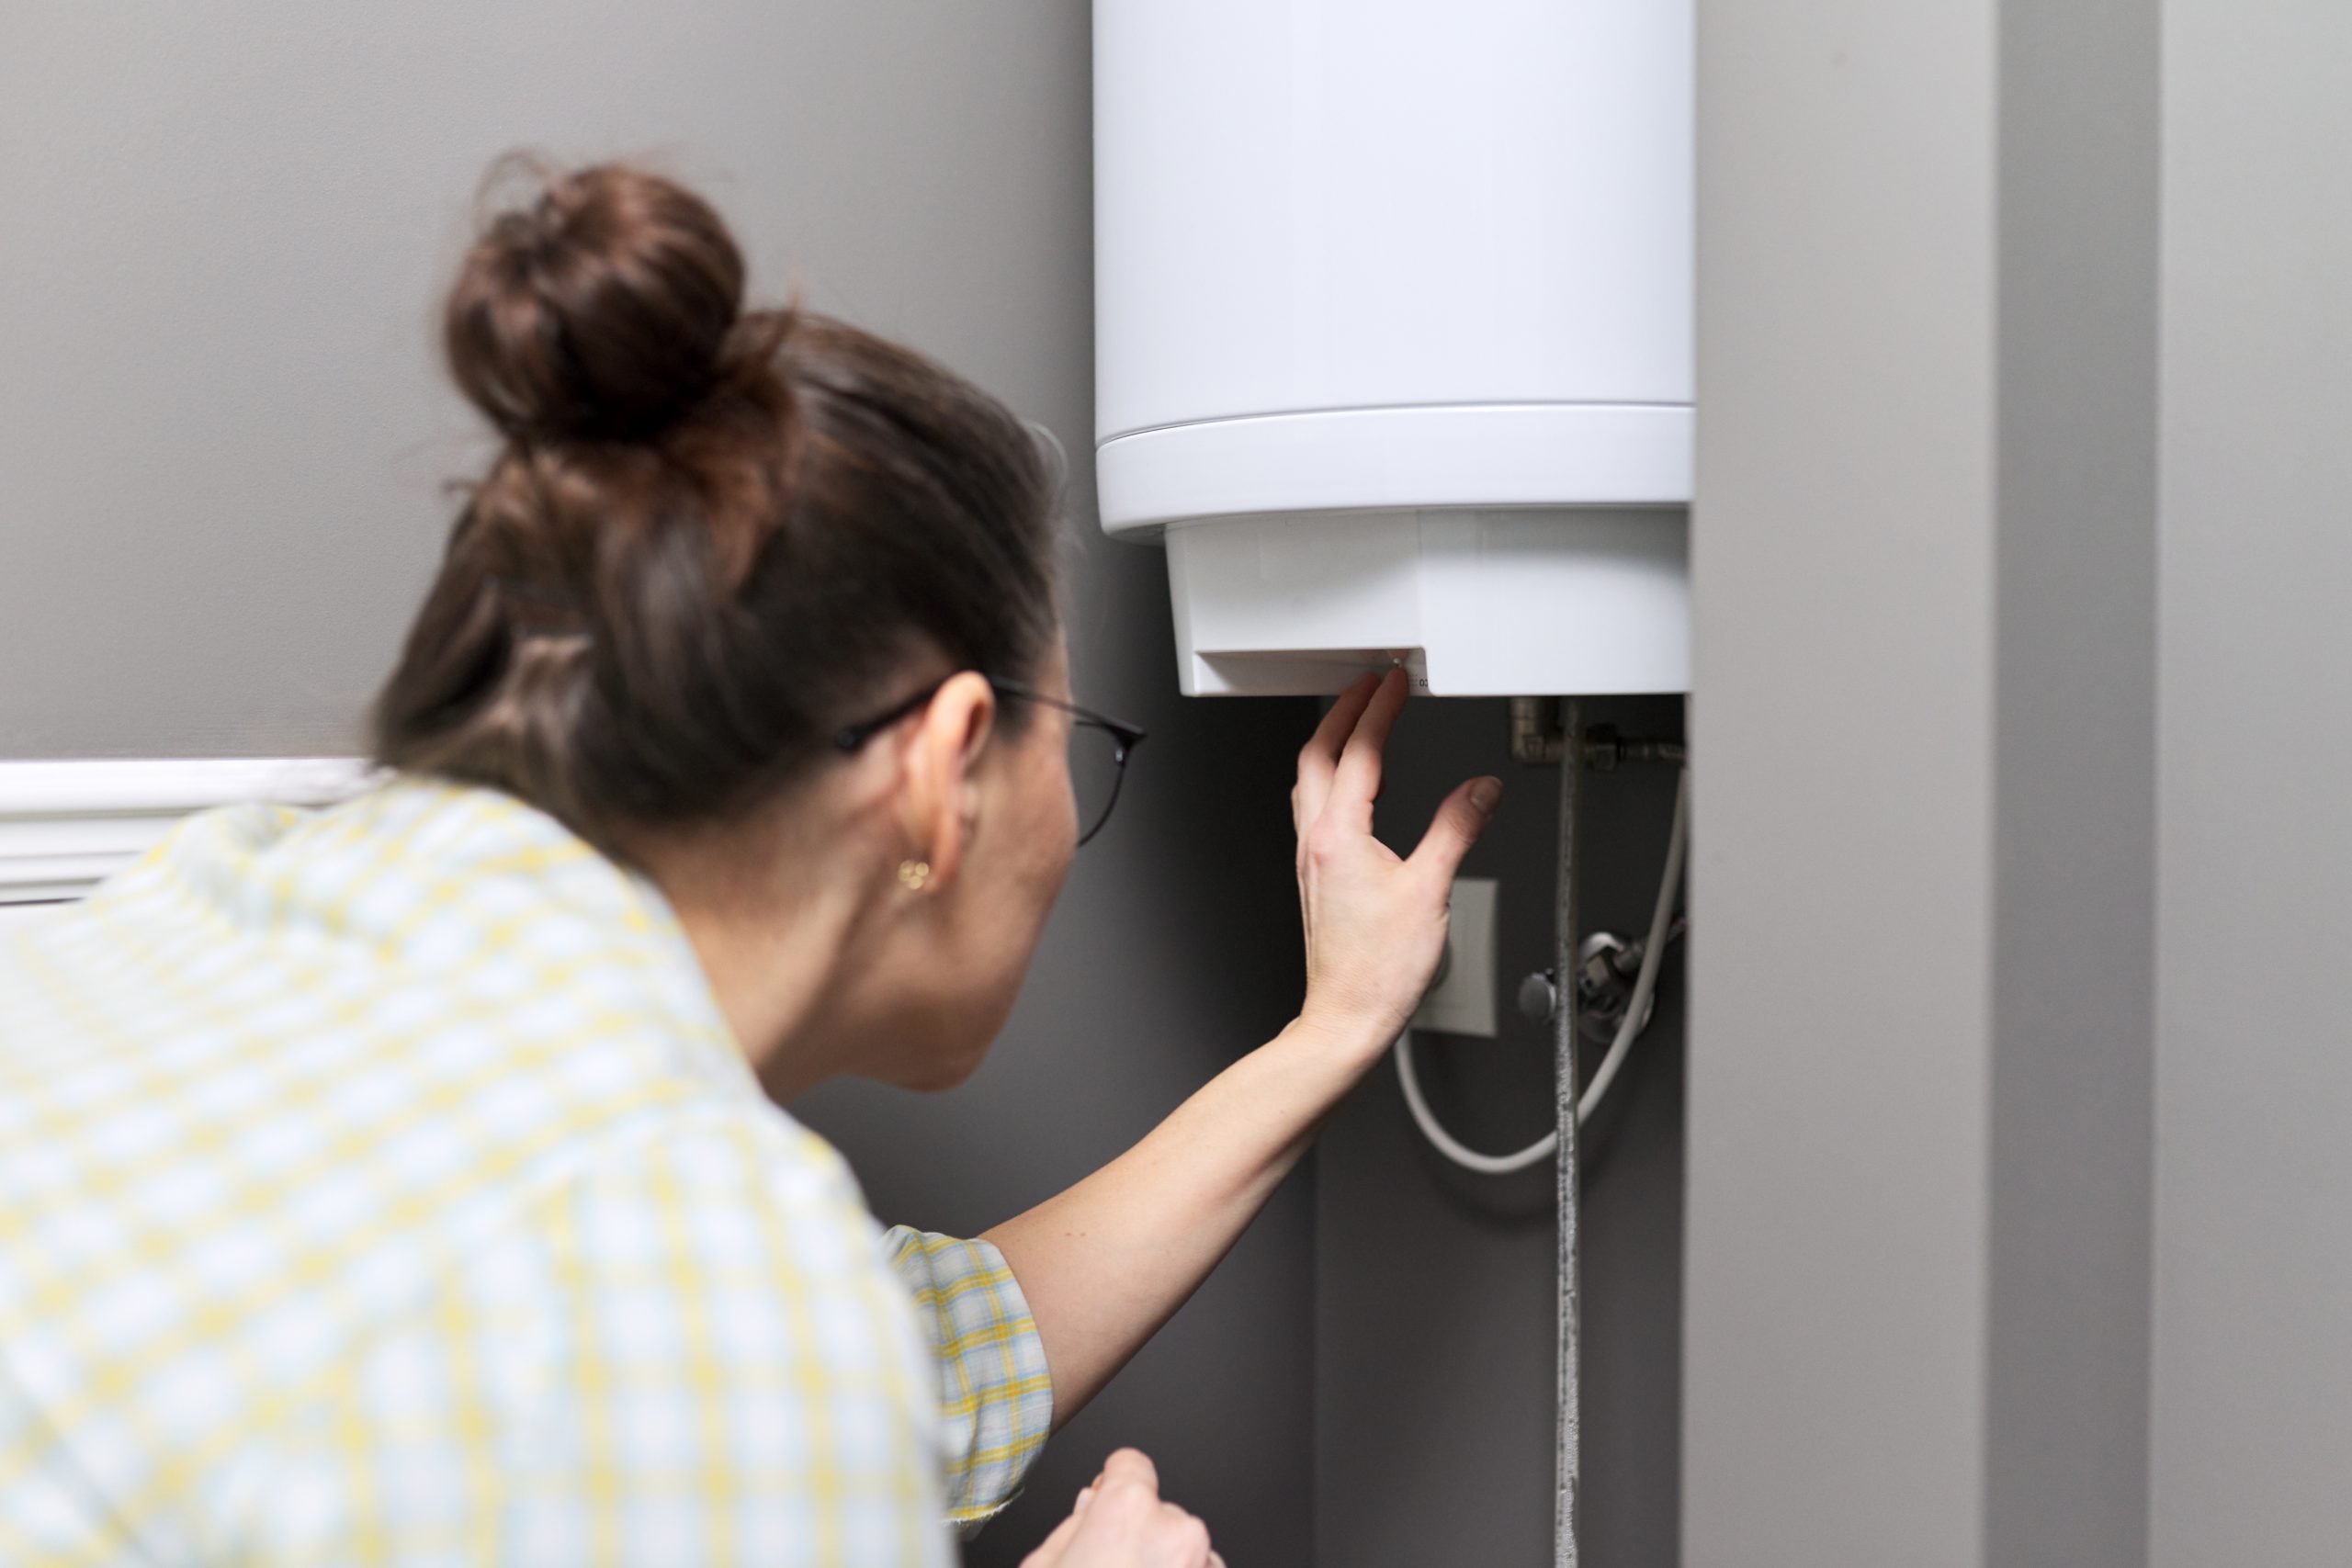 Home Water Heater Woman Regulates The Temperature 2022 01 20 19 53 30 Utc